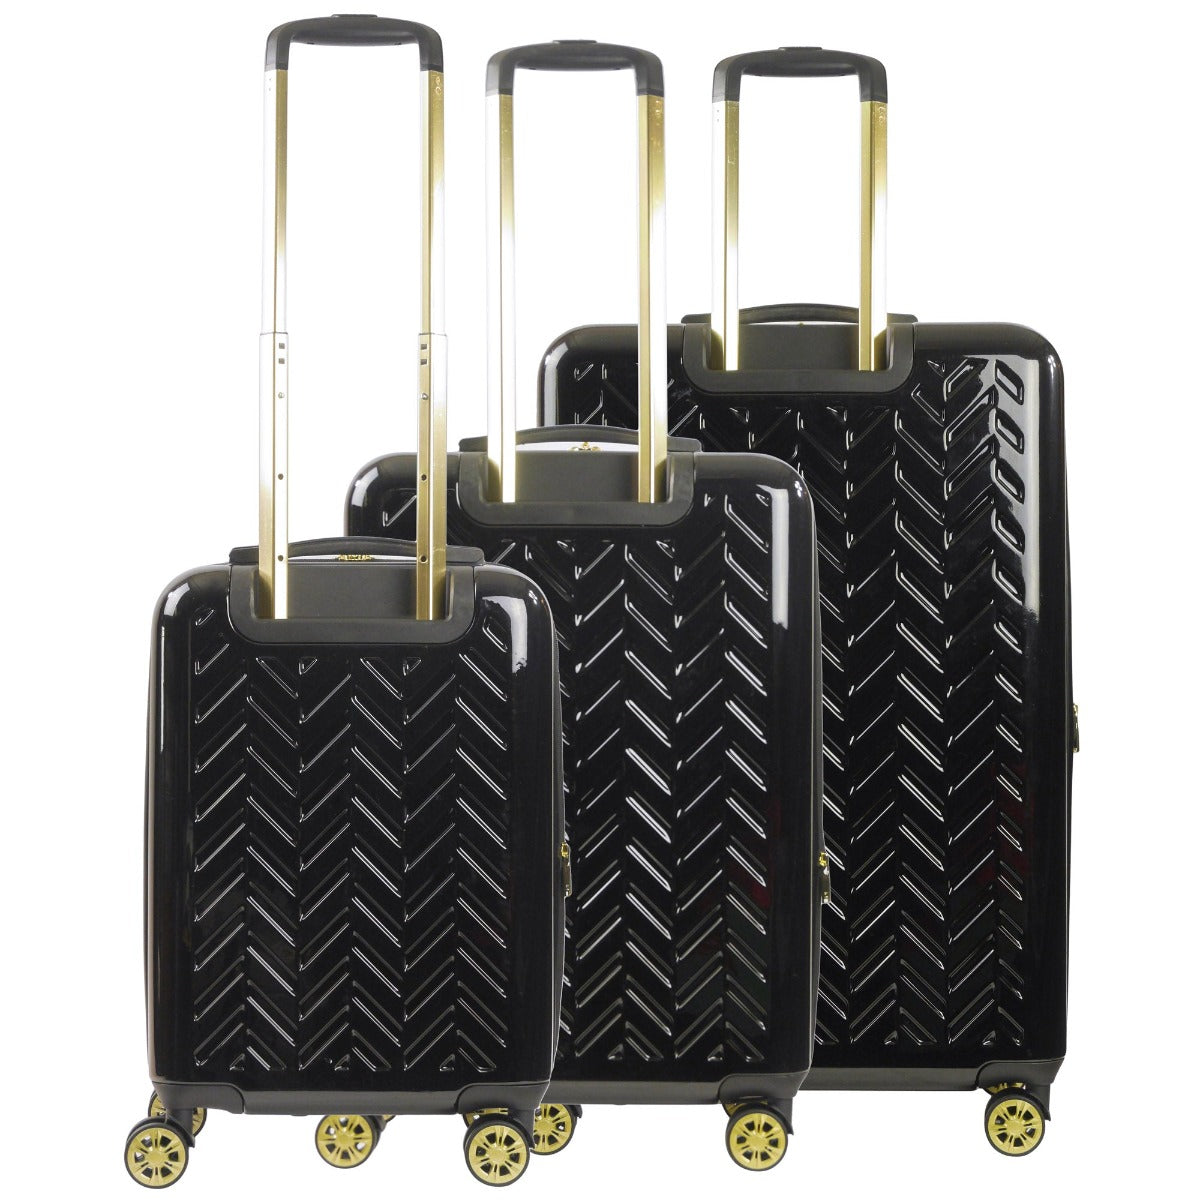 Ful Groove hardside spinner suitcase 3 Pc black gold detail luggage Set